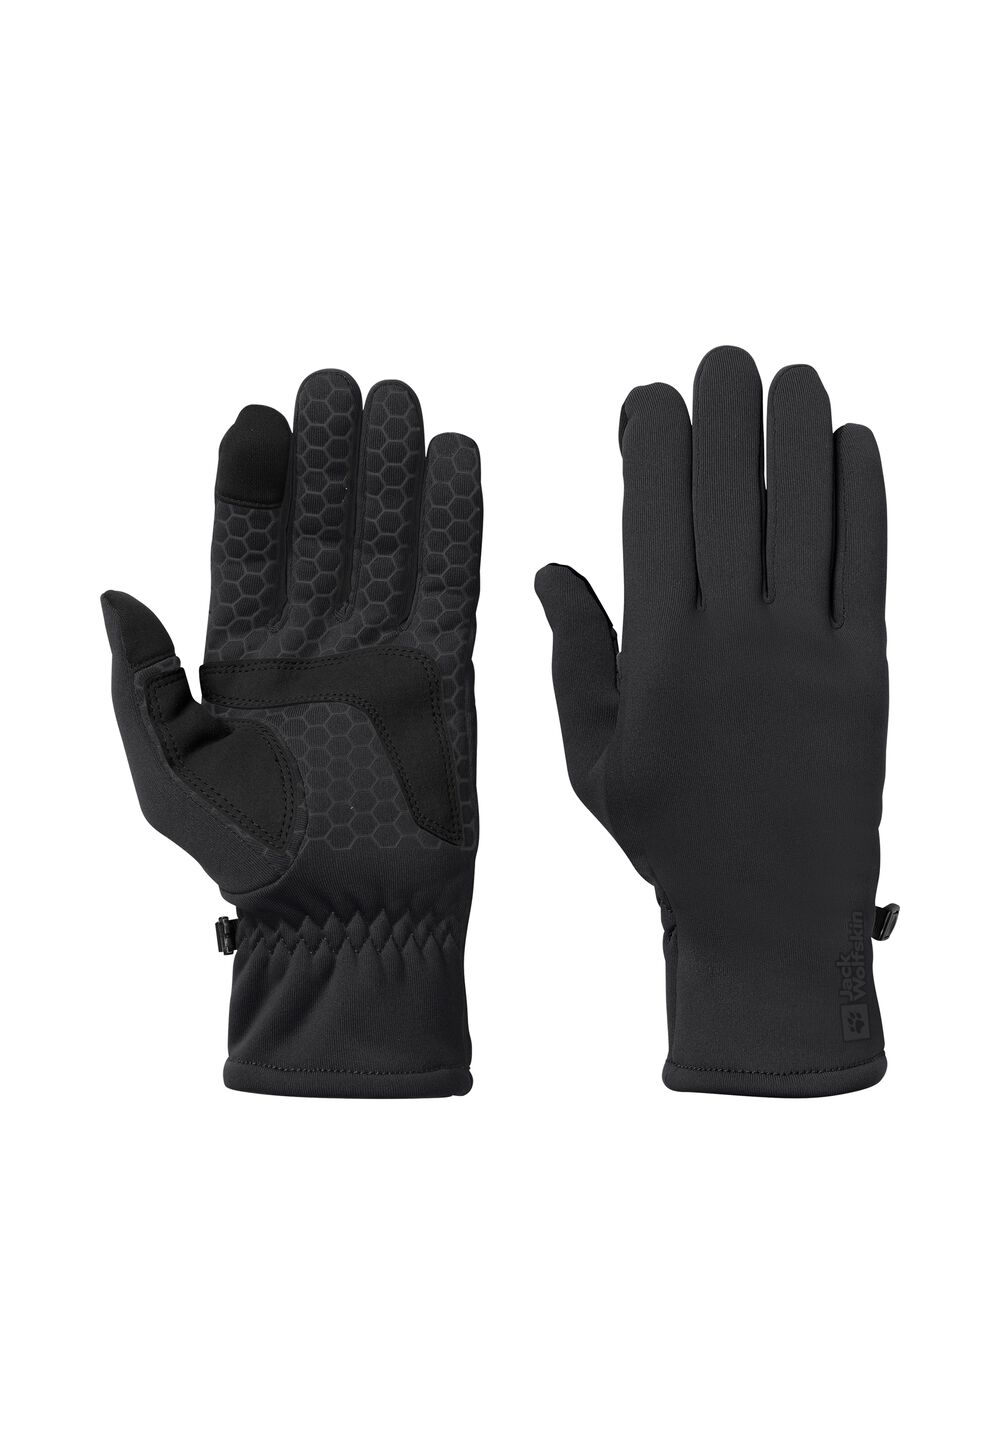 Jack Wolfskin Allrounder Glove Fleece handschoenen XL zwart black